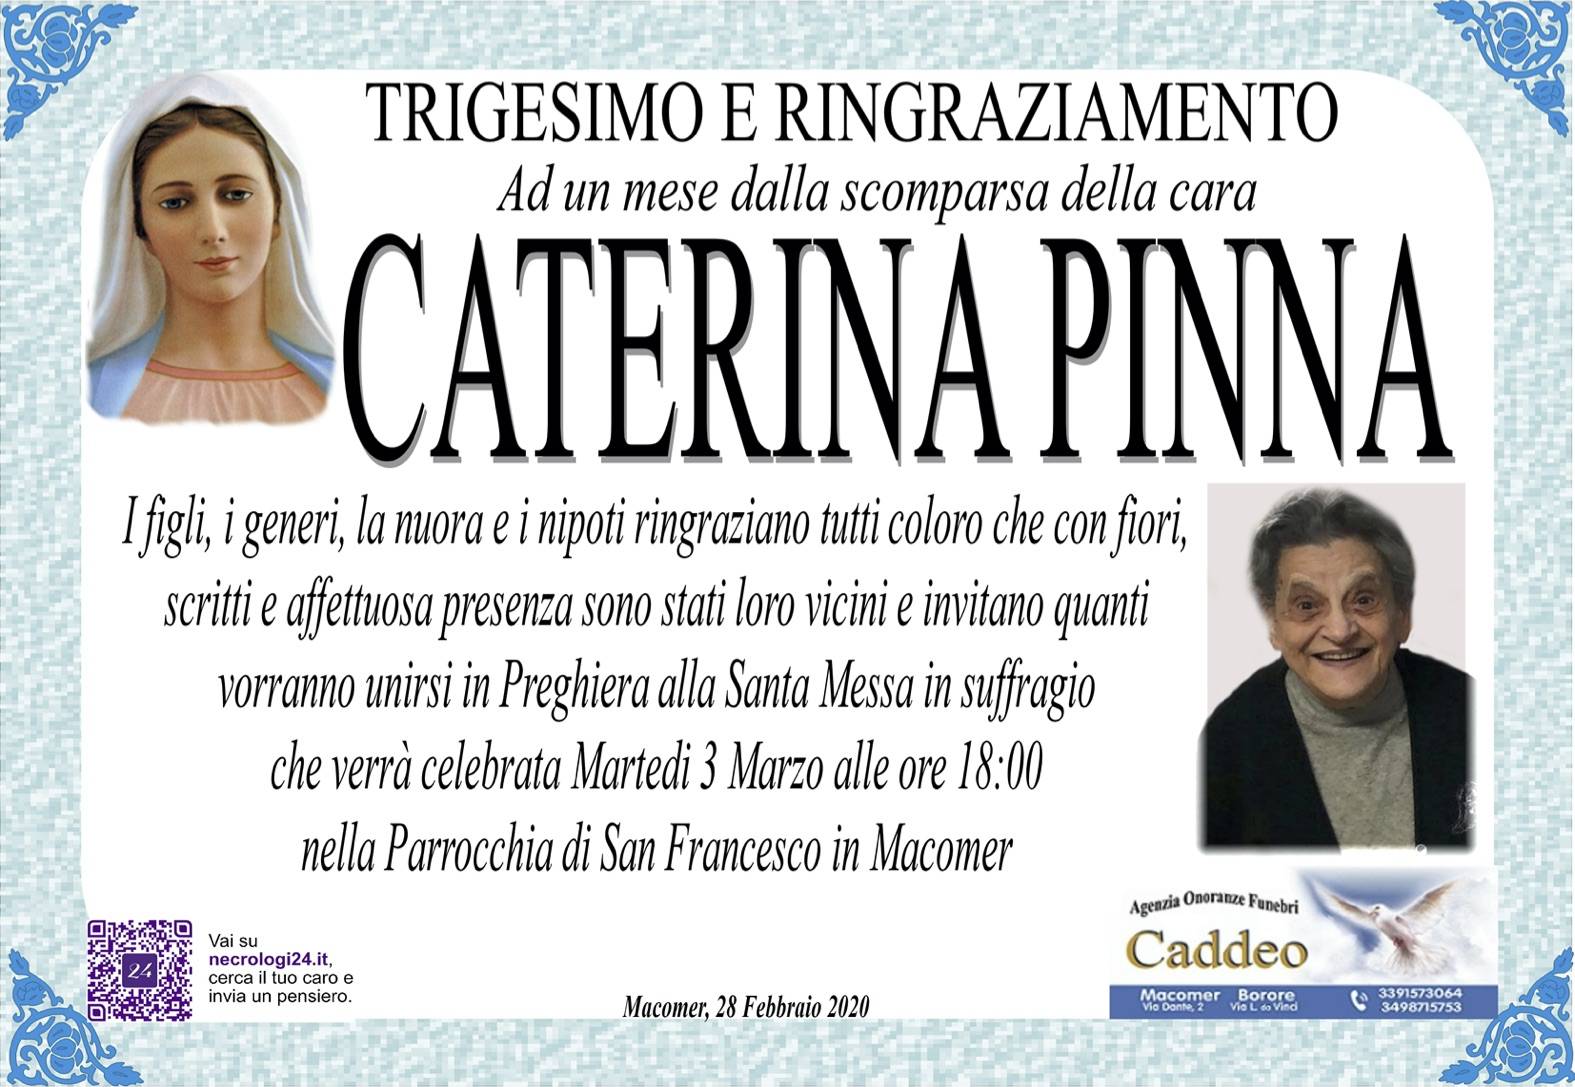 Caterina Pinna